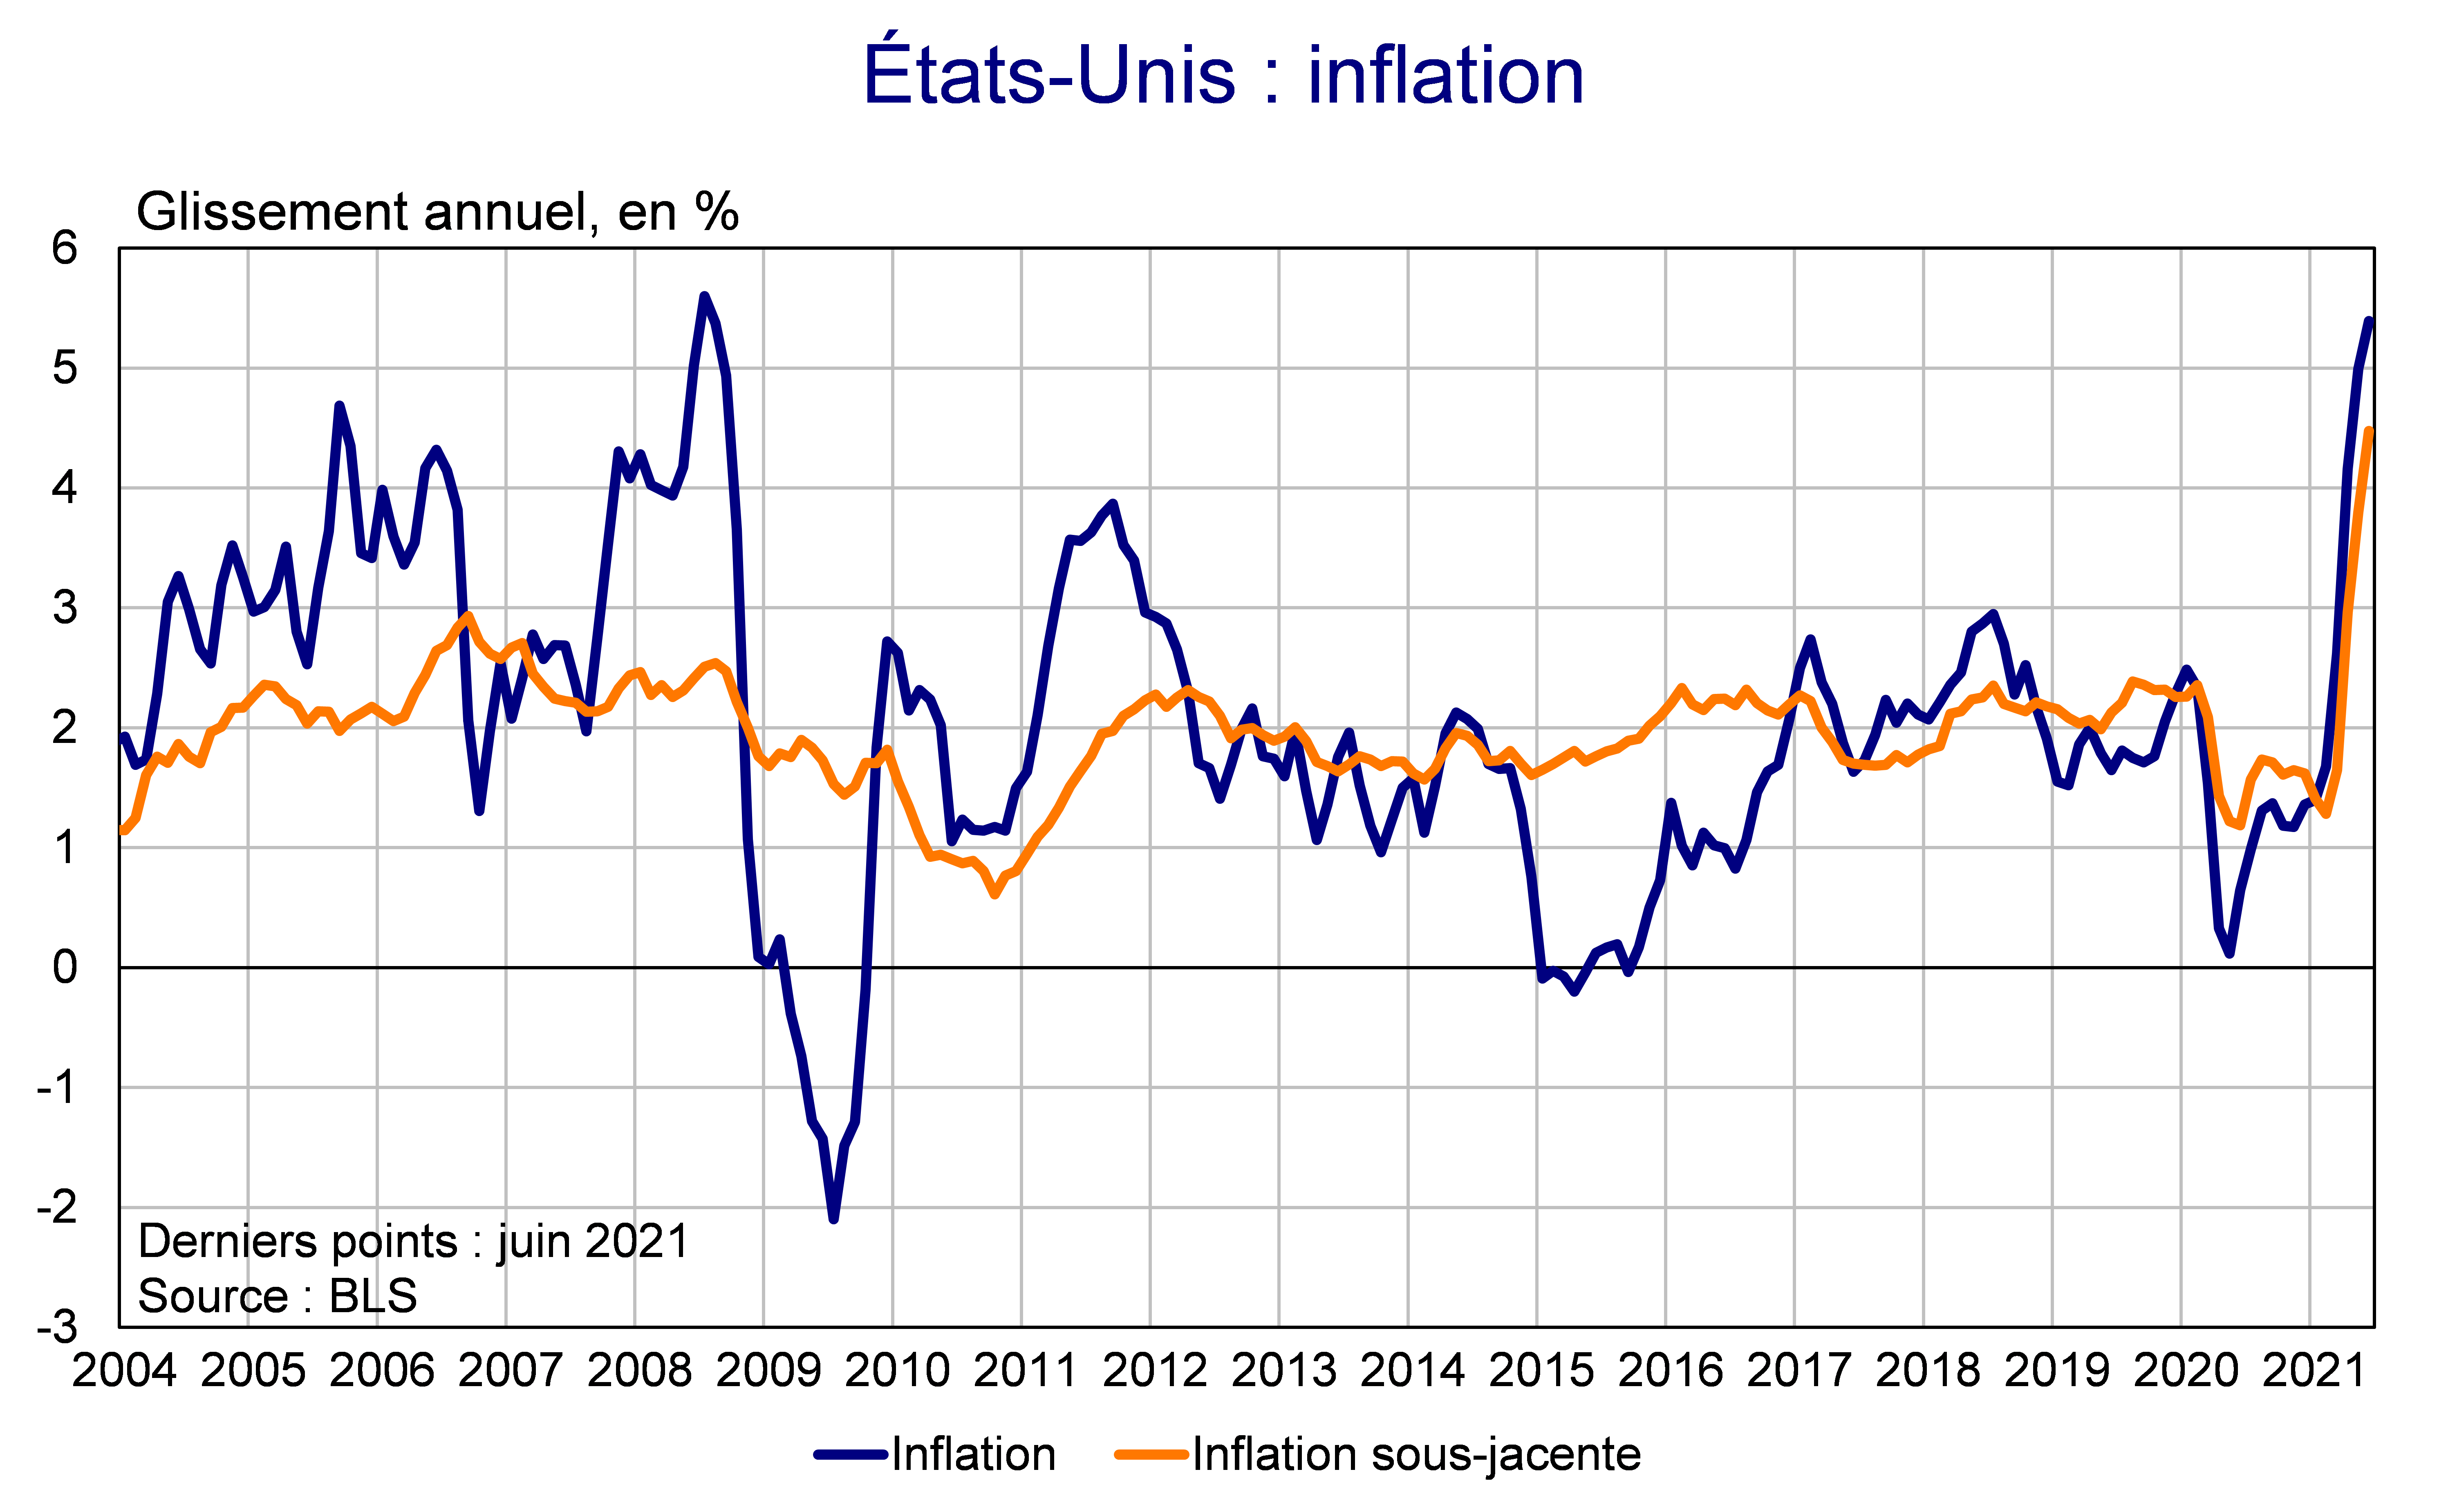 Etats-Unis inflation